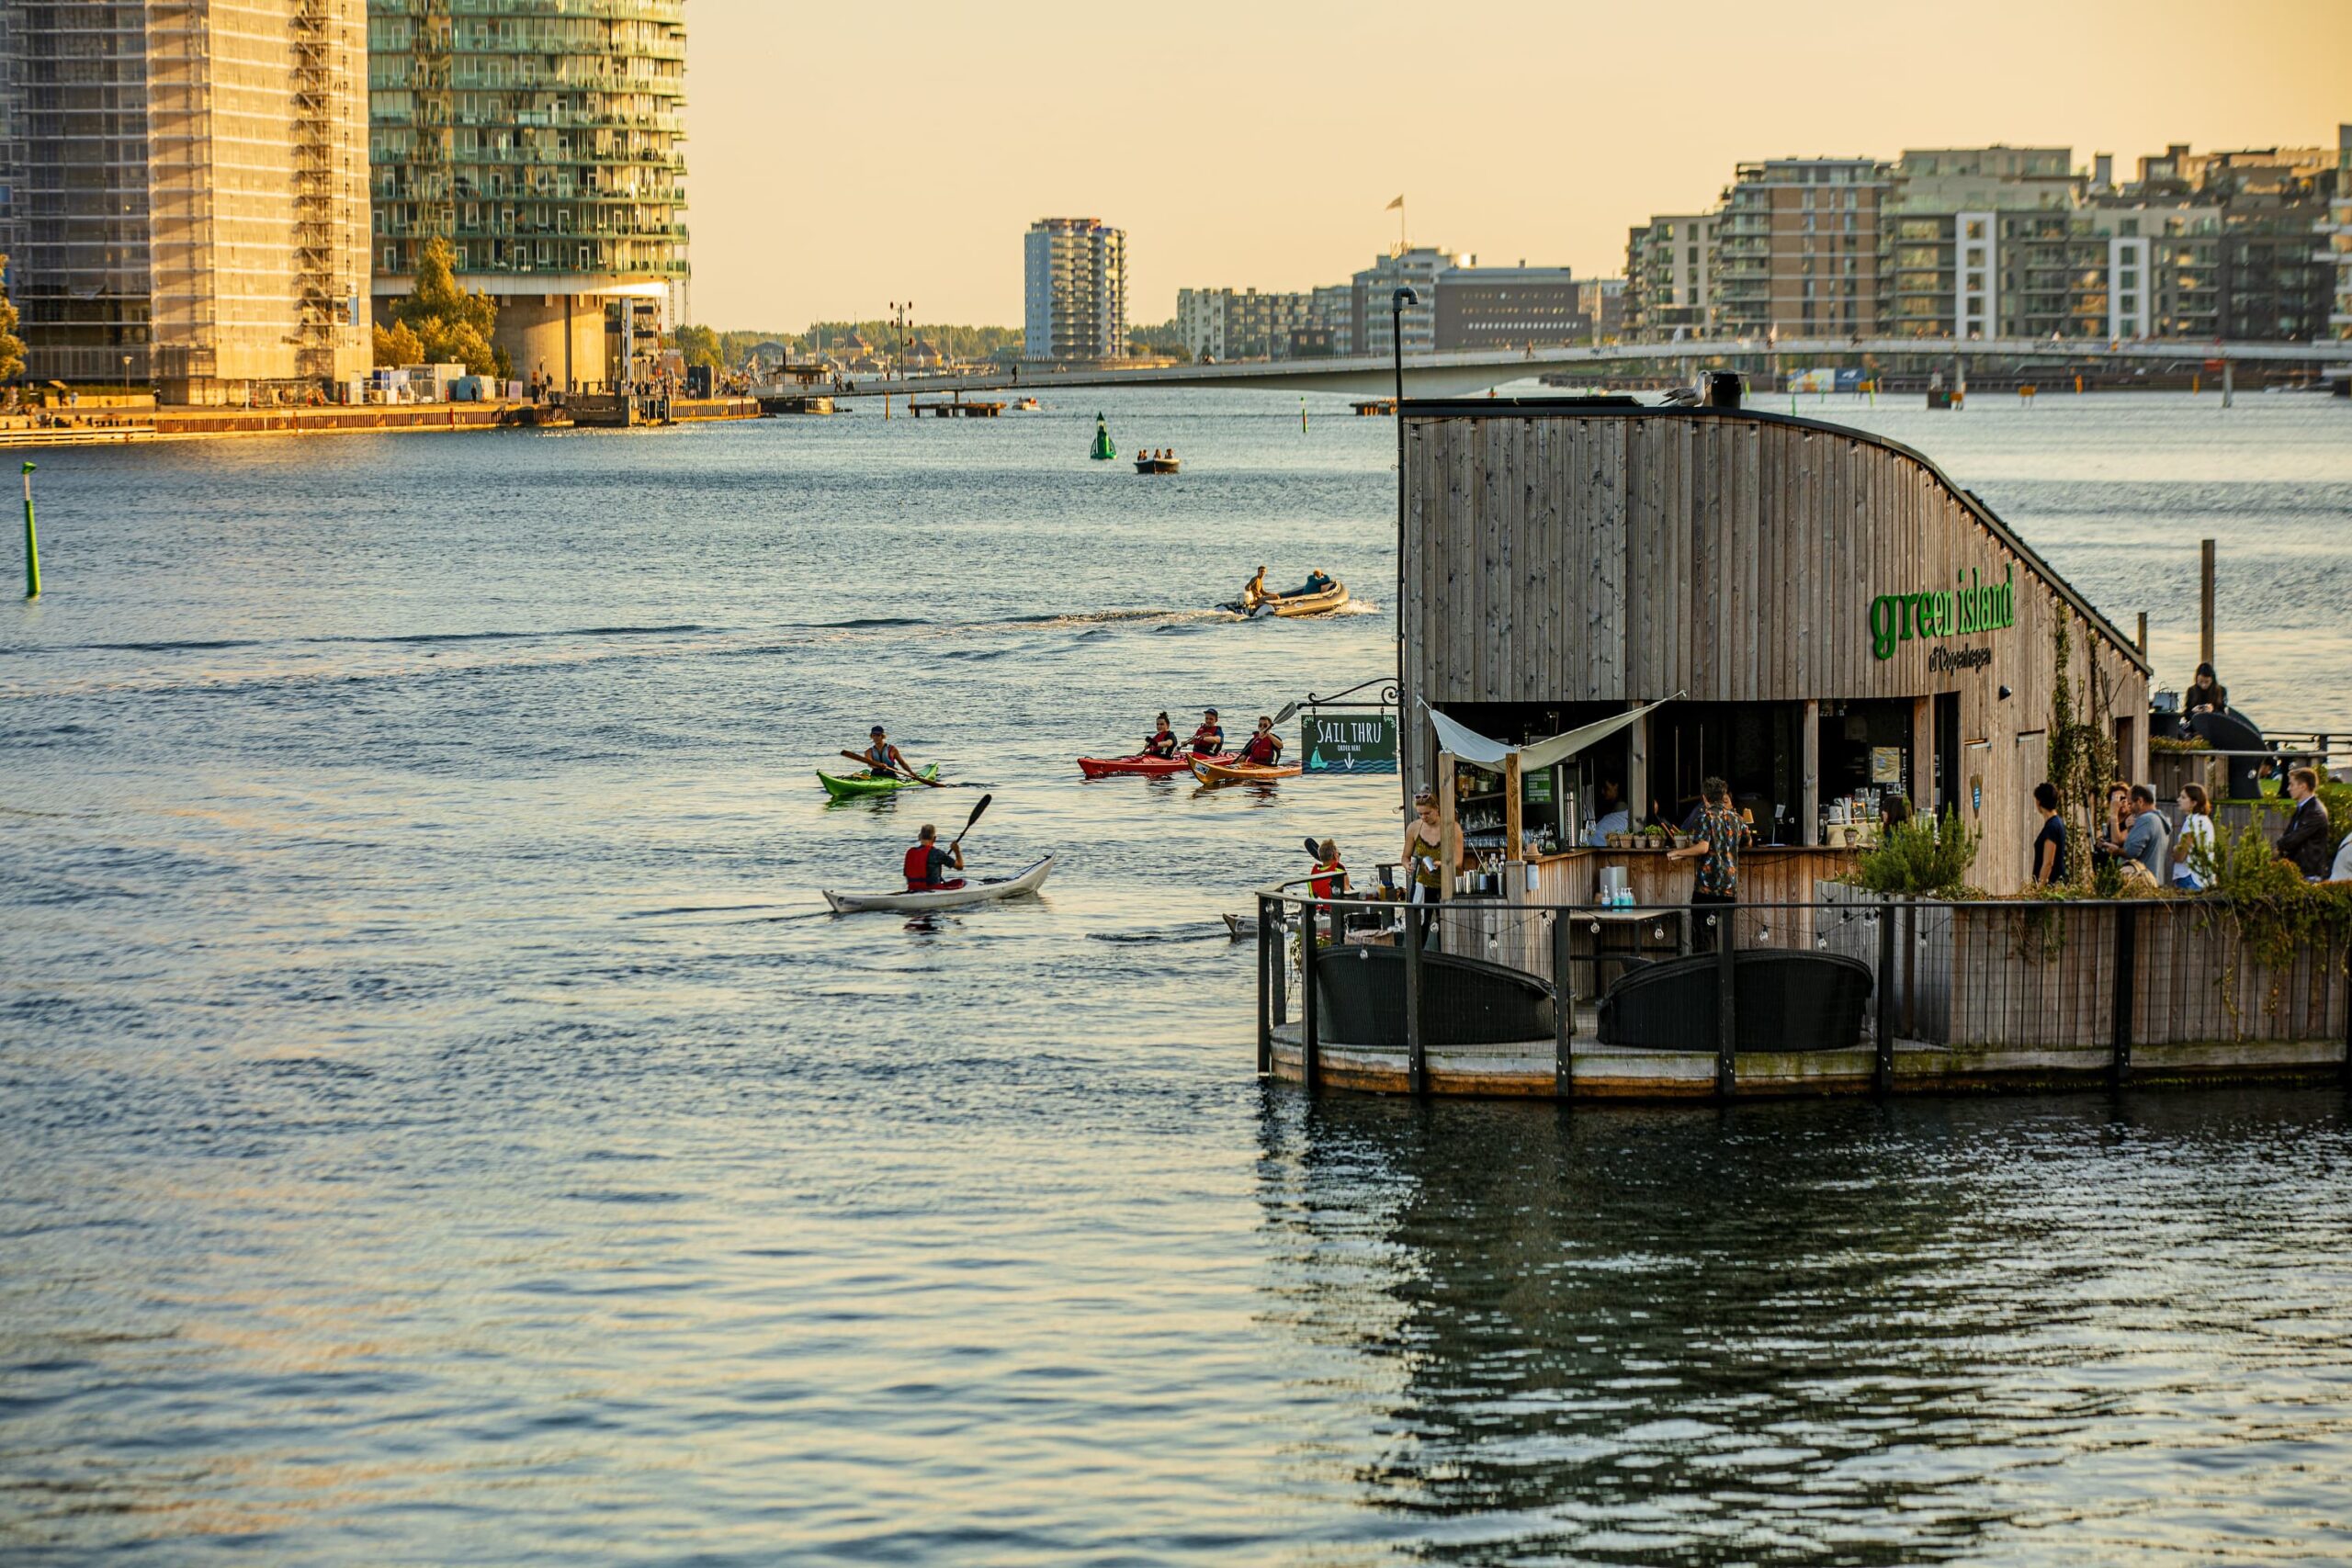 People kajaking in Copenhagen habour by the floating bar